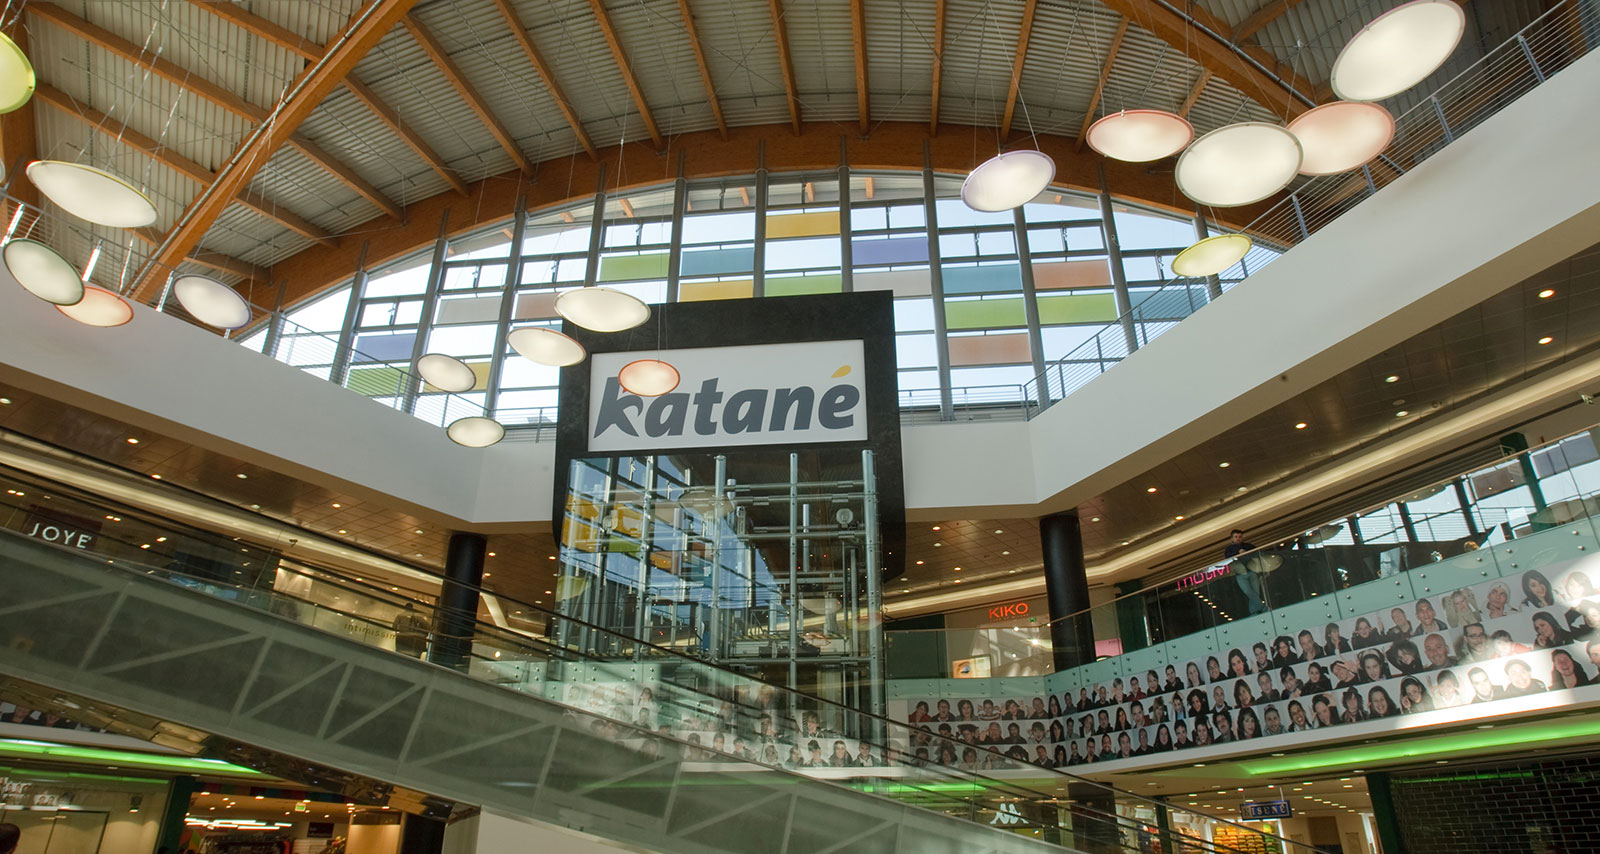 Centro commerciale katané 6 aprile 2015 pasquetta 